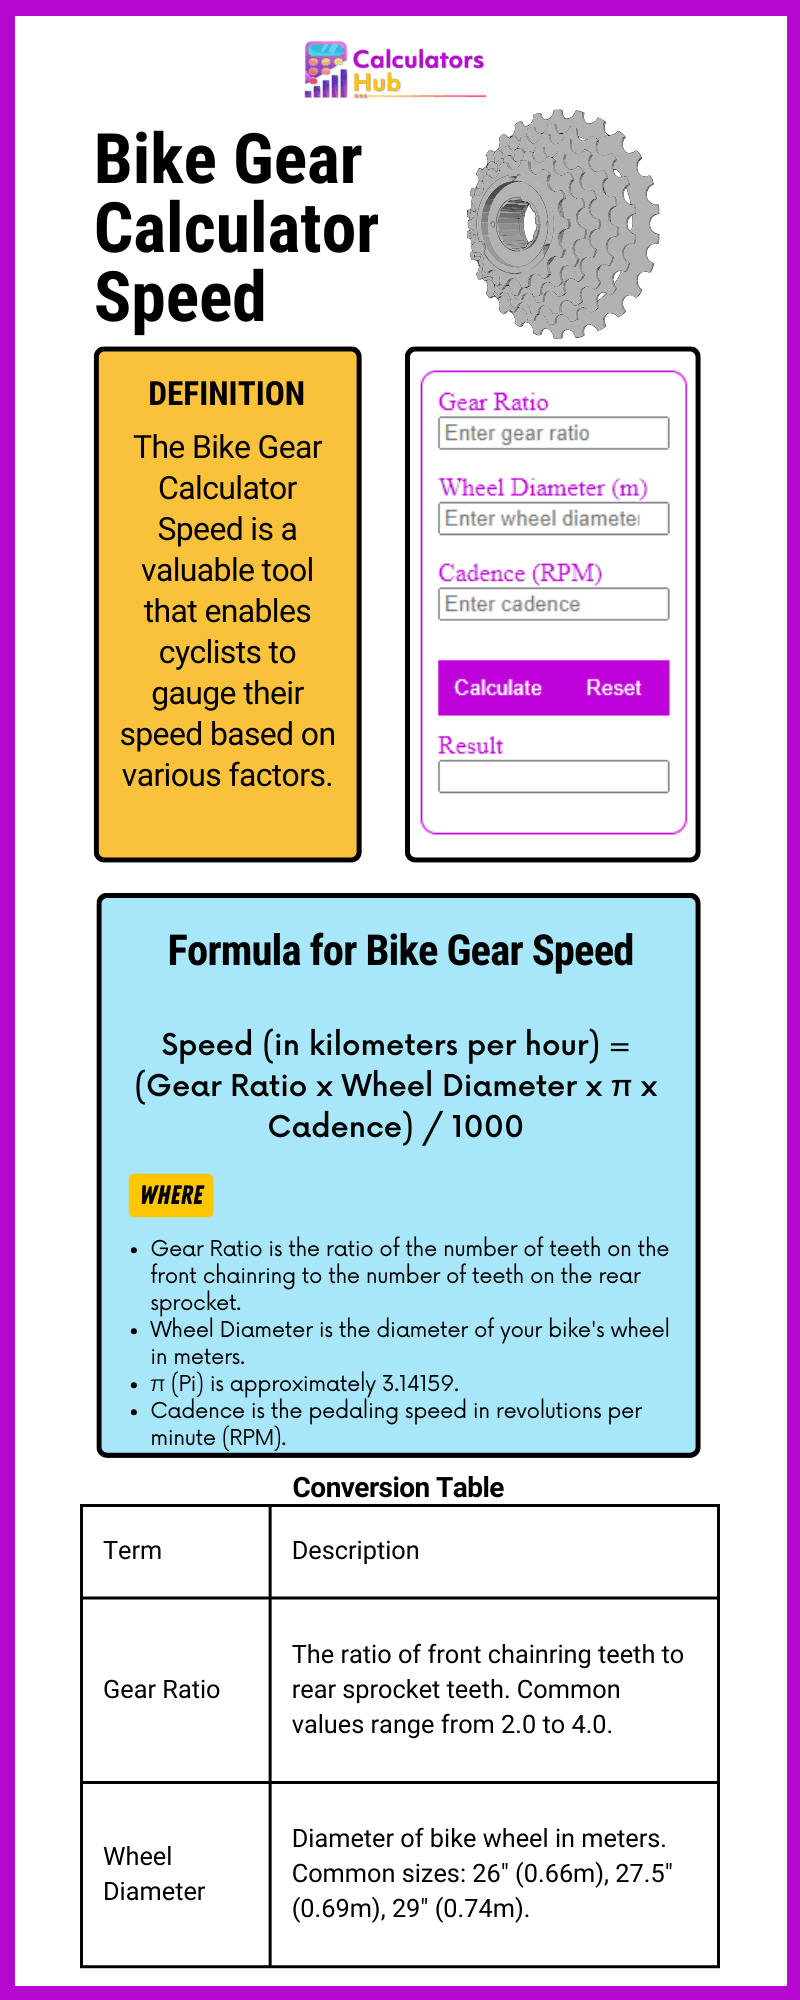 Bike Gear Calculator Speed